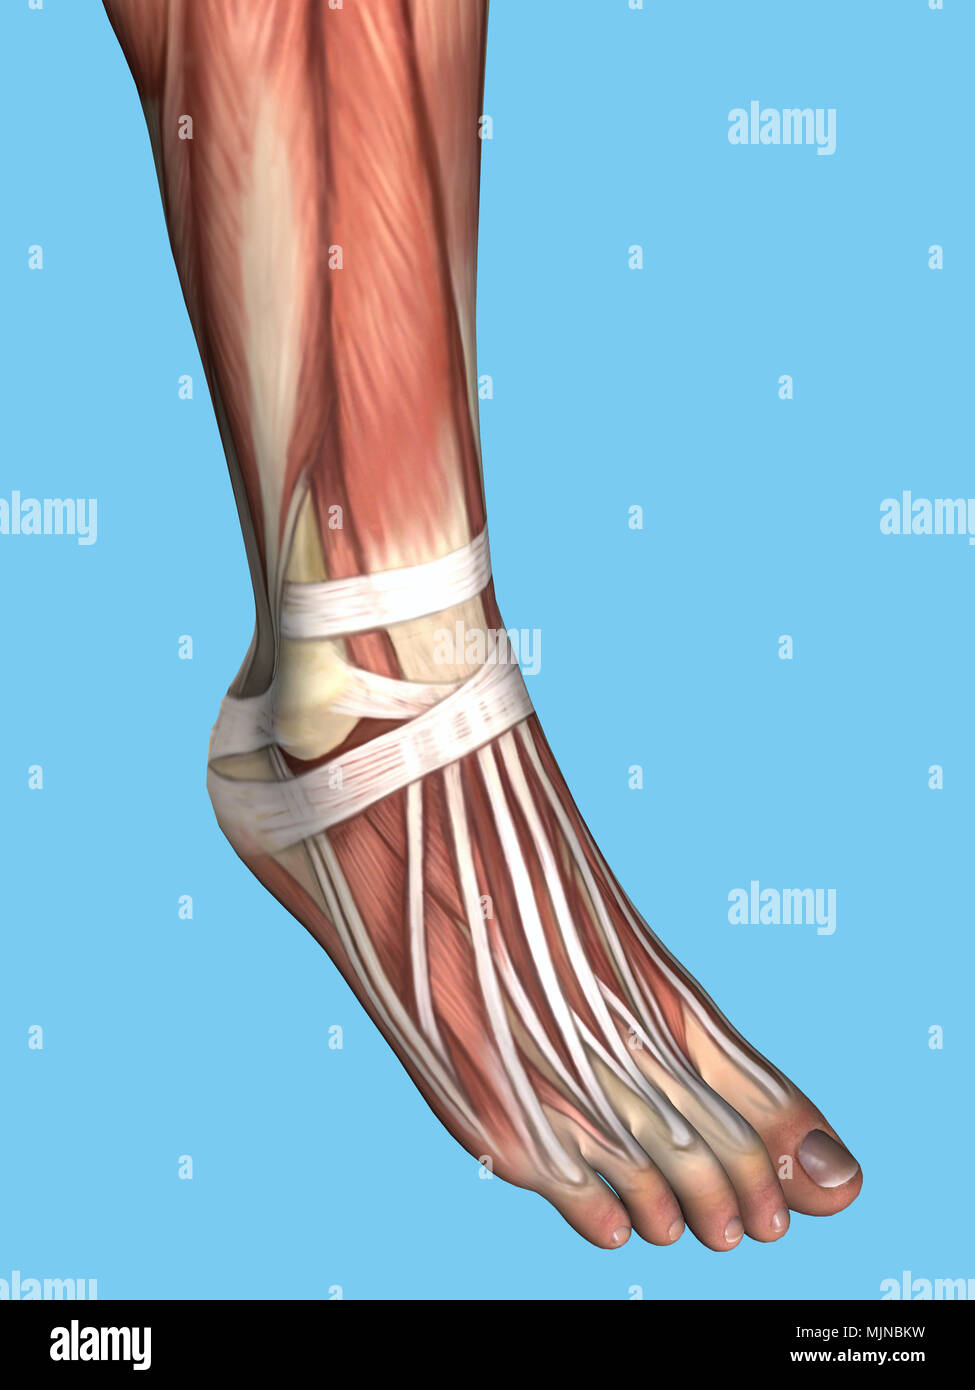 Anatomy of foot Stock Photo